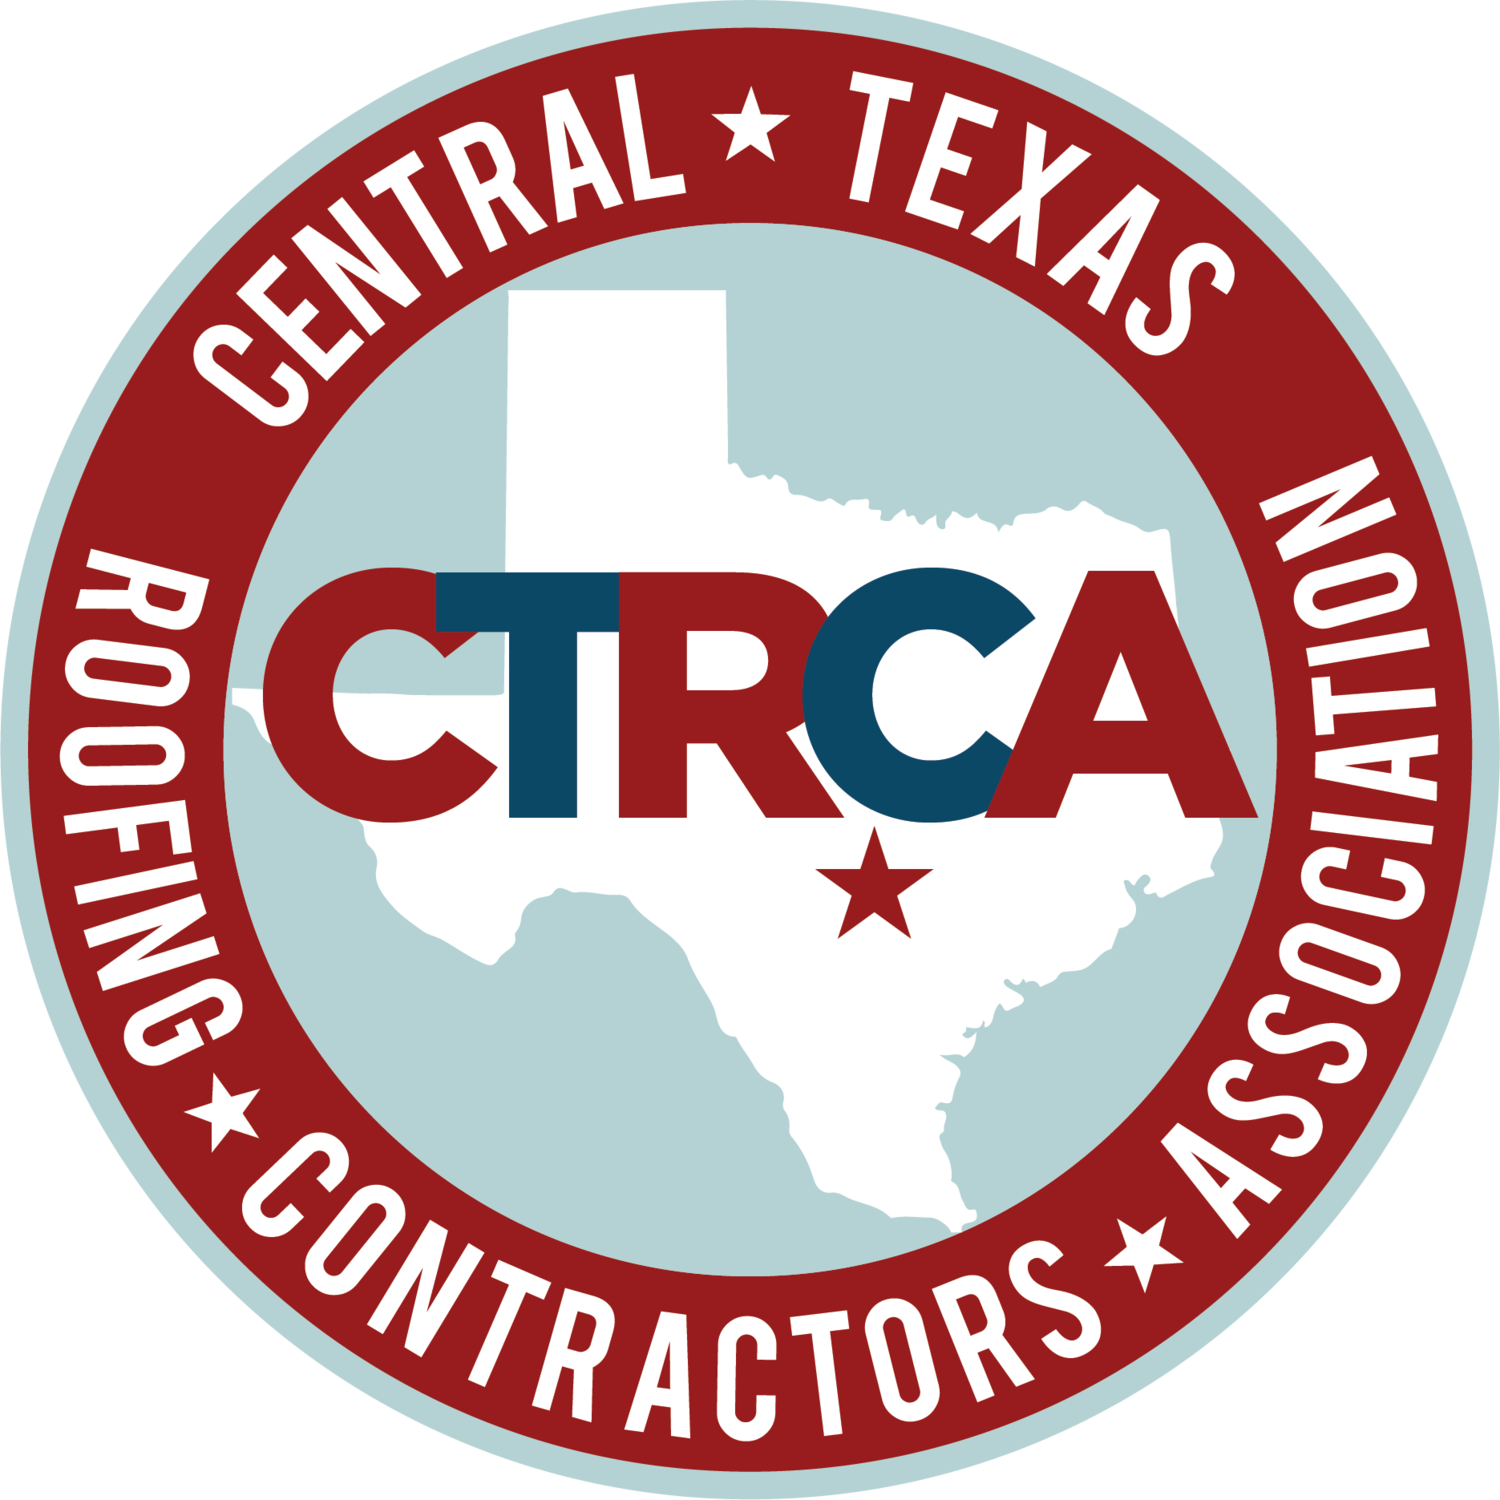 Central Texas Roofing Contractors Association Austin, TX